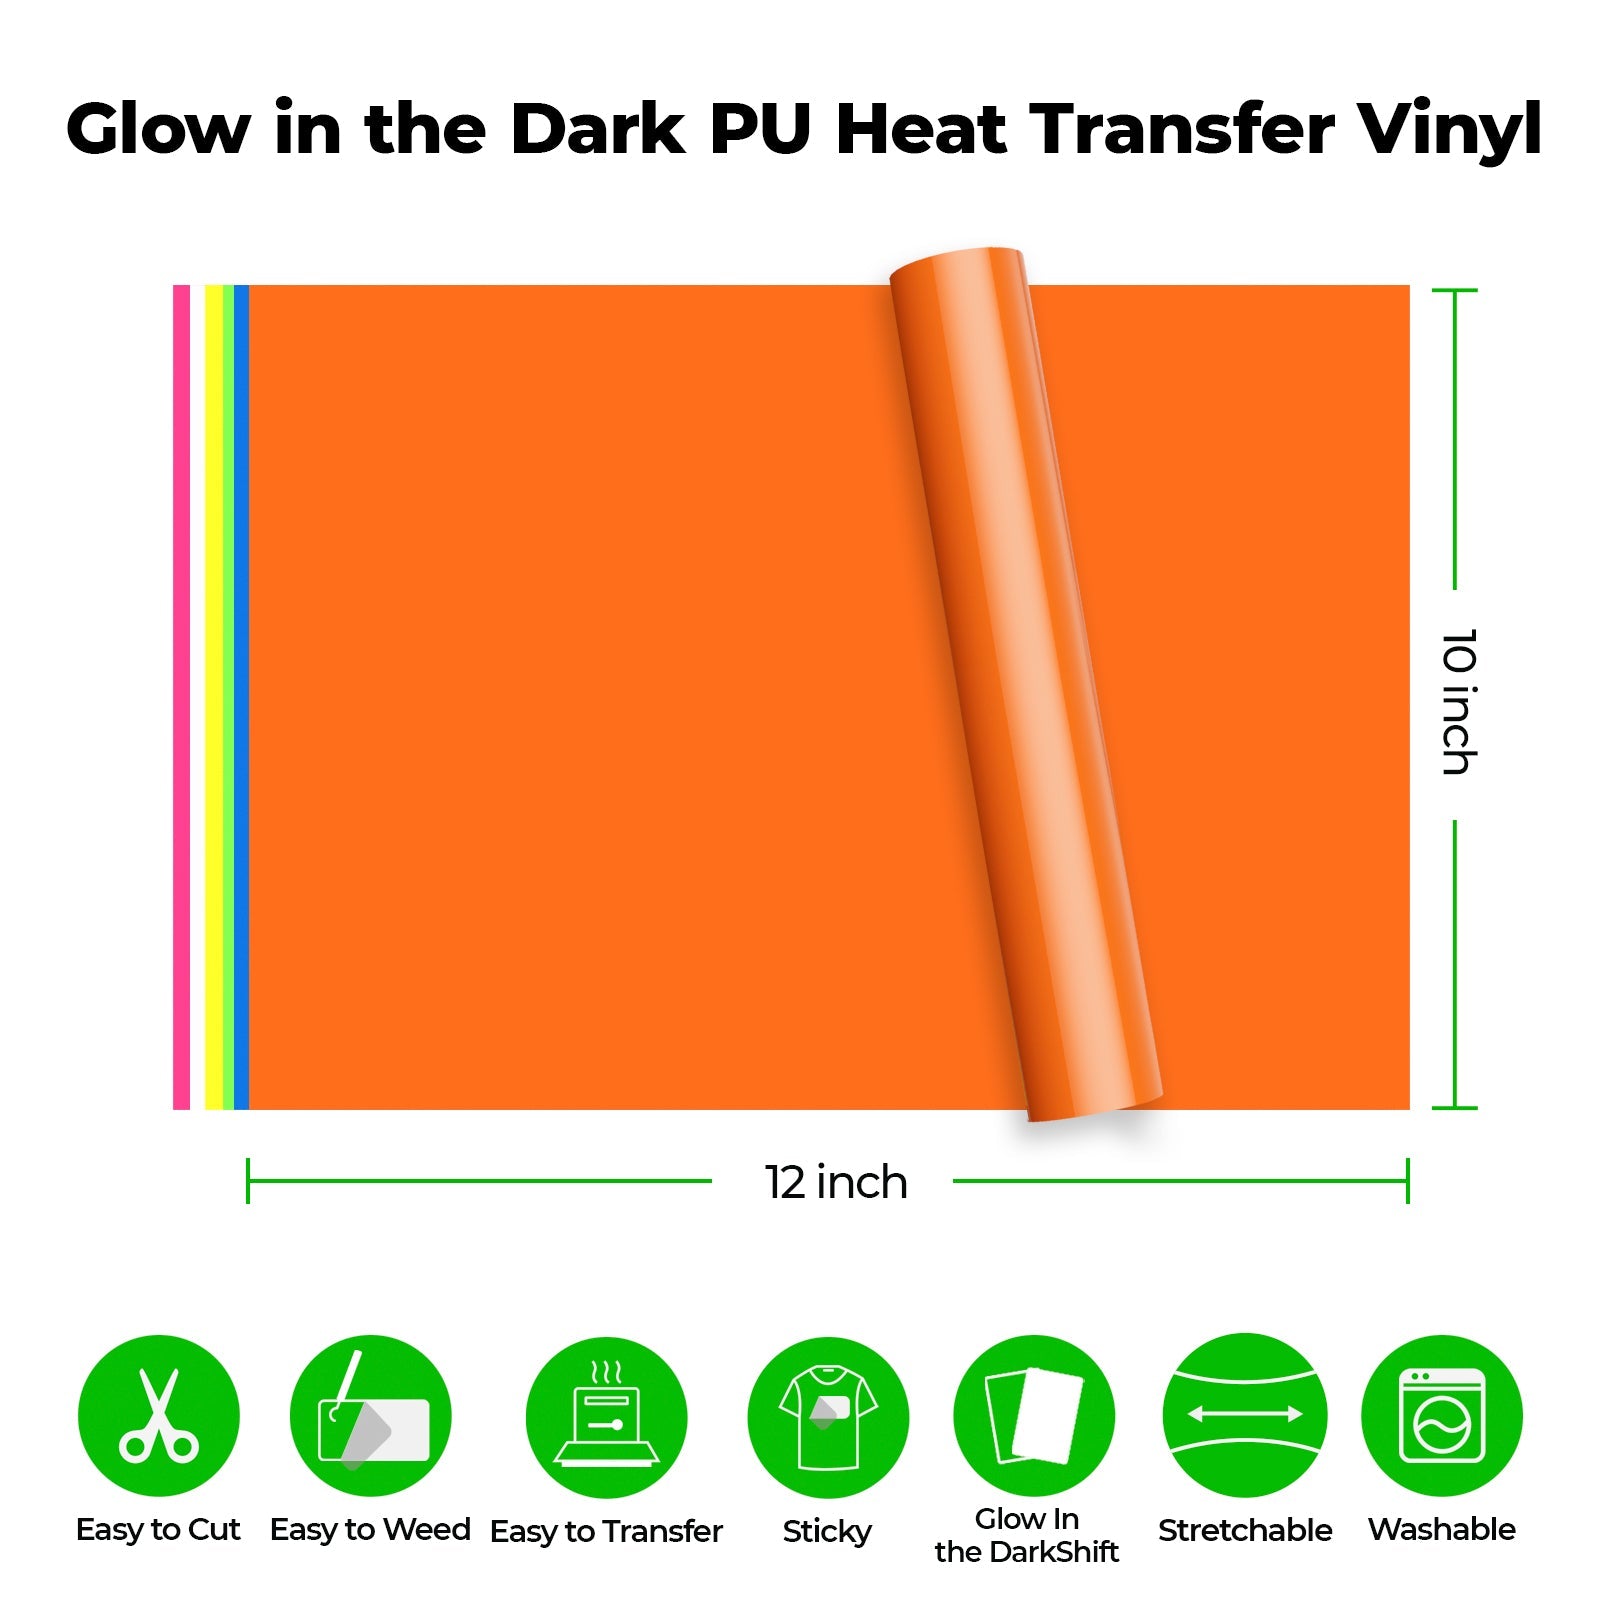 Glow in the Dark PU Heat Transfer Vinyl (20pcs)